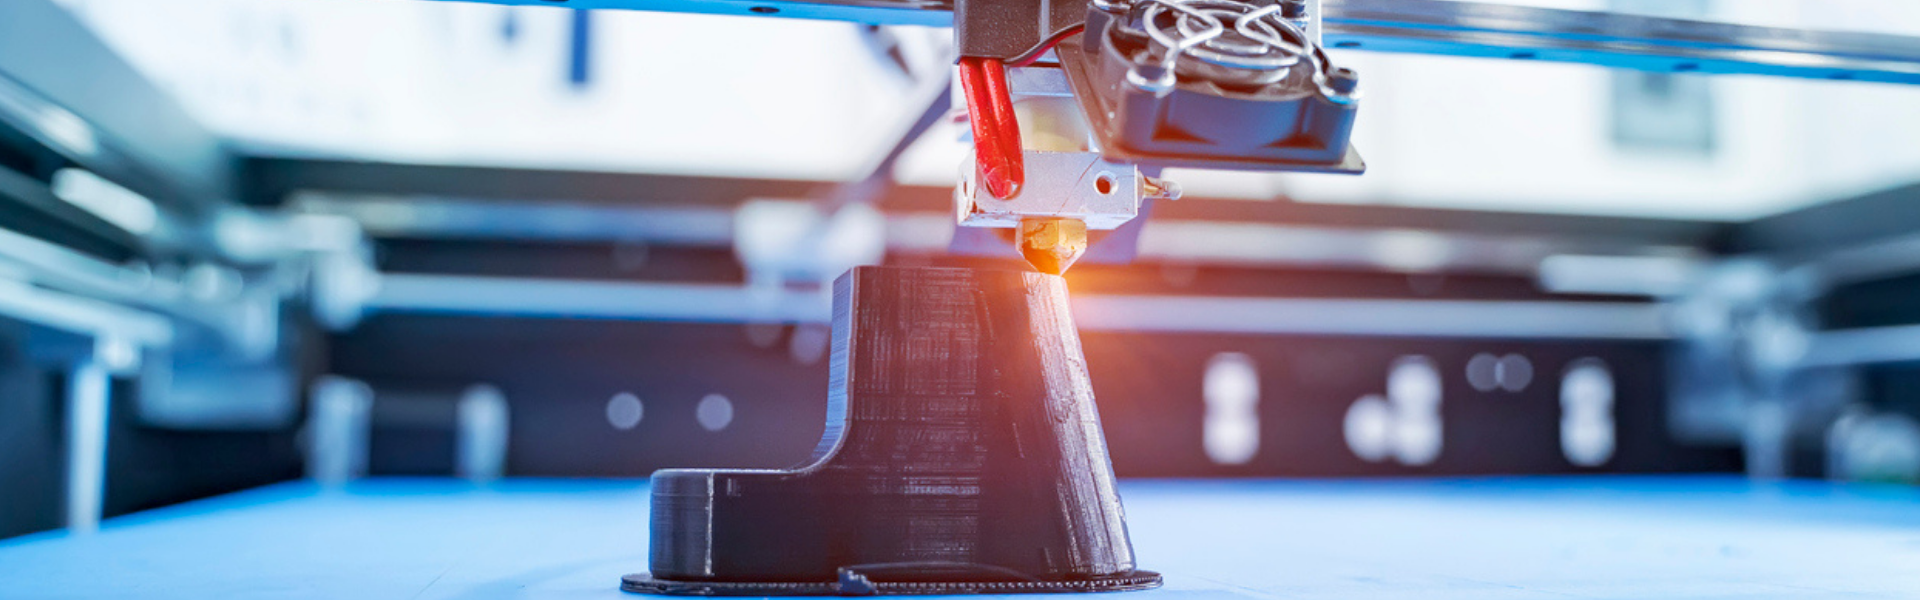 3D printer printing at large scale